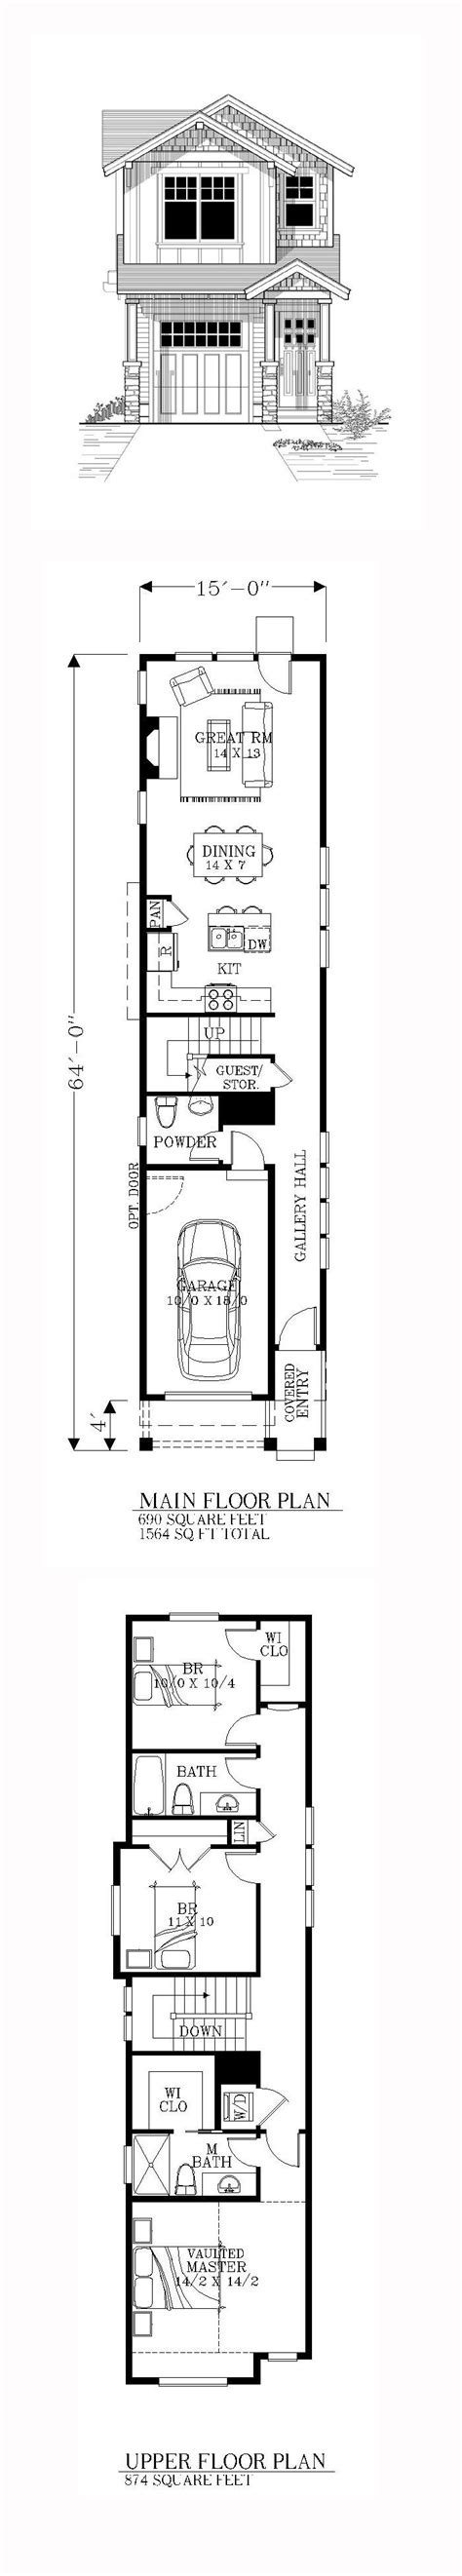 floor plans narrow lot homes floorplansclick